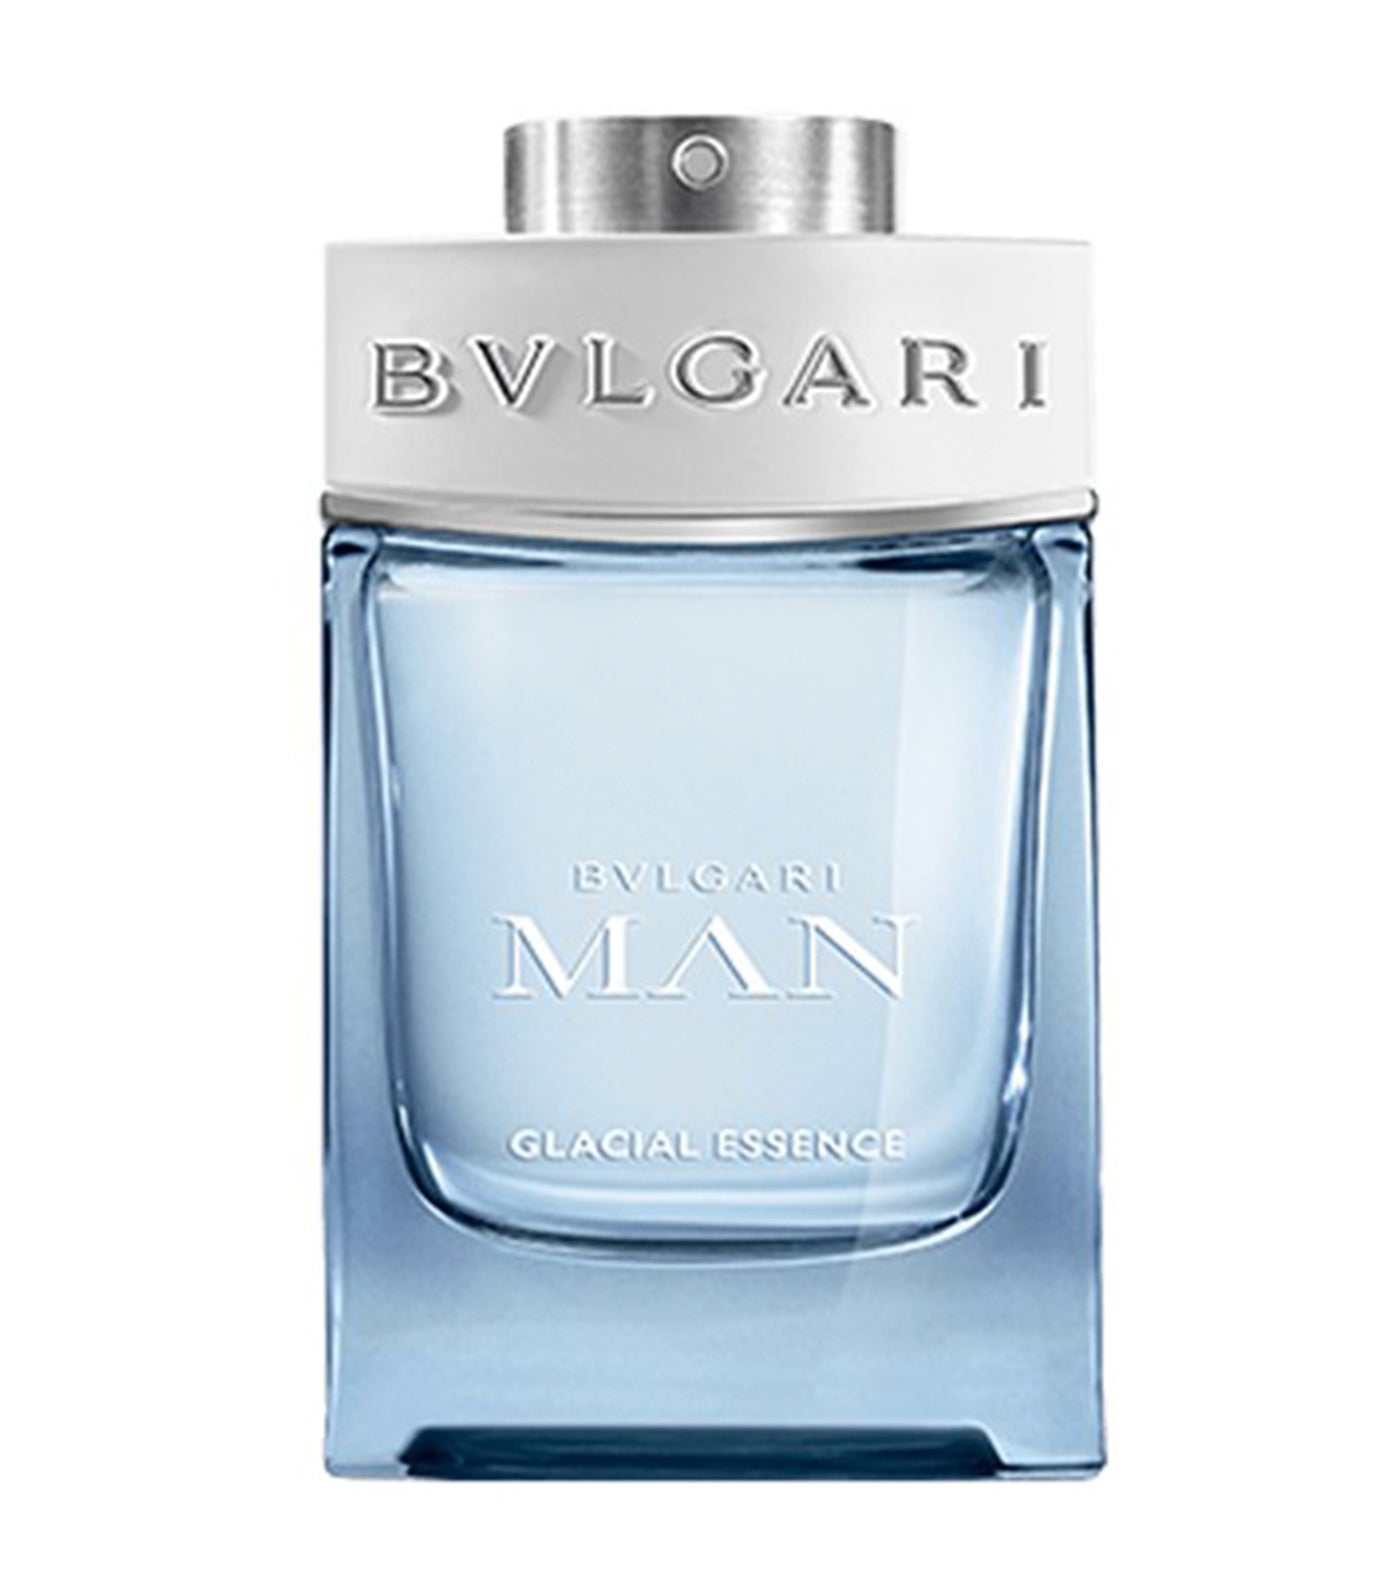 Bvlgari Man Glacial Essence Eau De Parfum by Bvlgari 100ml